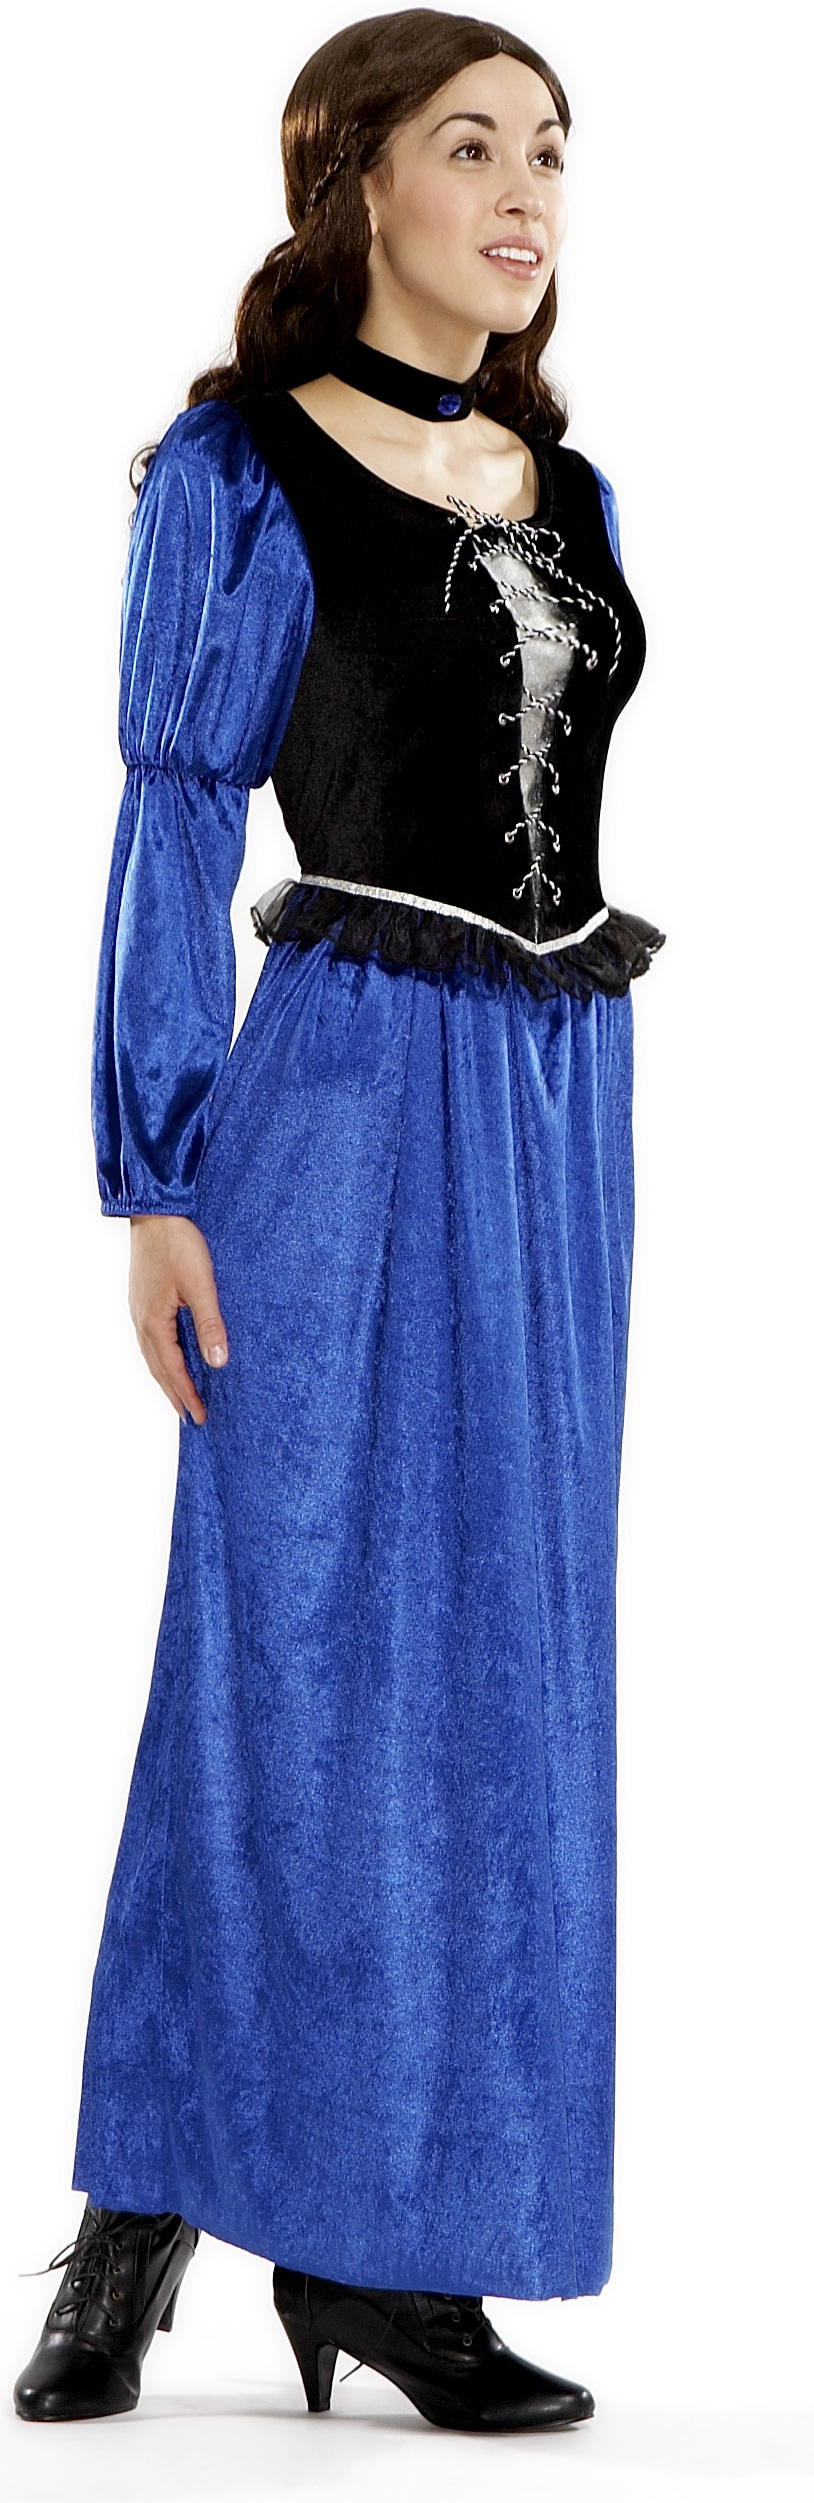 AMC Women's Juliet Adult Costume - One-Size (8-14)